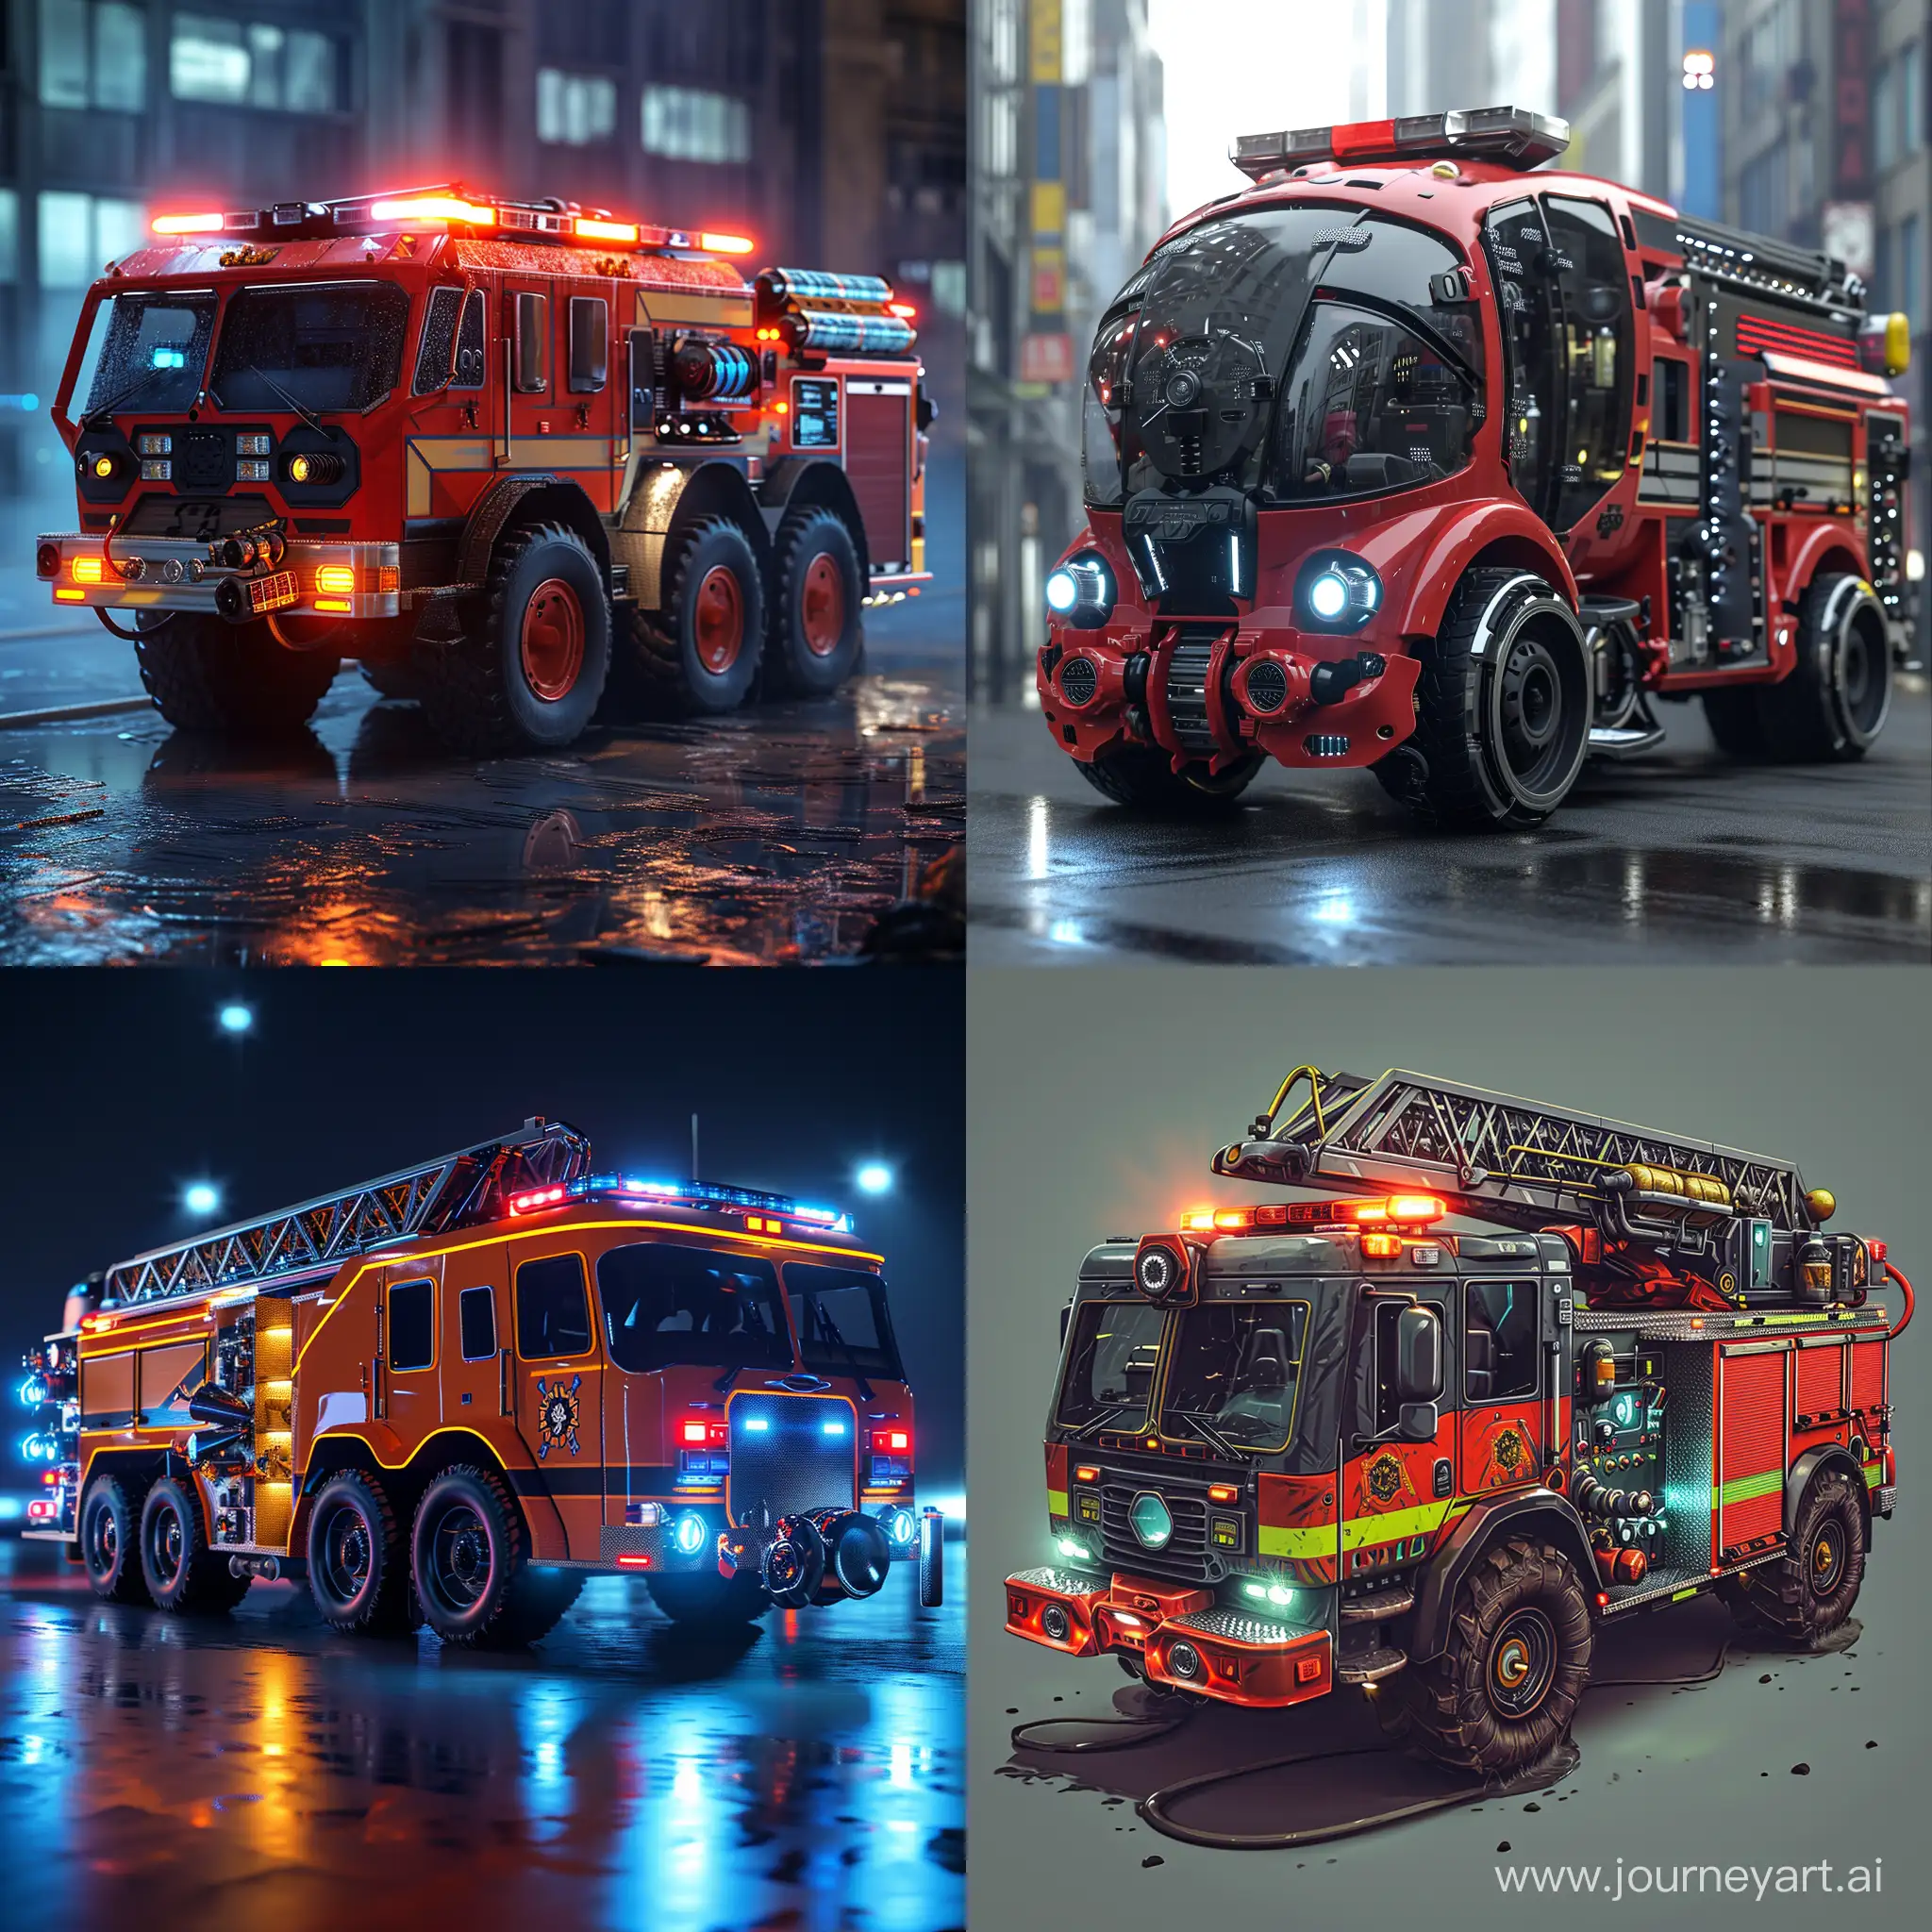 Futuristic-HighTech-Fire-Truck-CuttingEdge-Emergency-Response-Vehicle